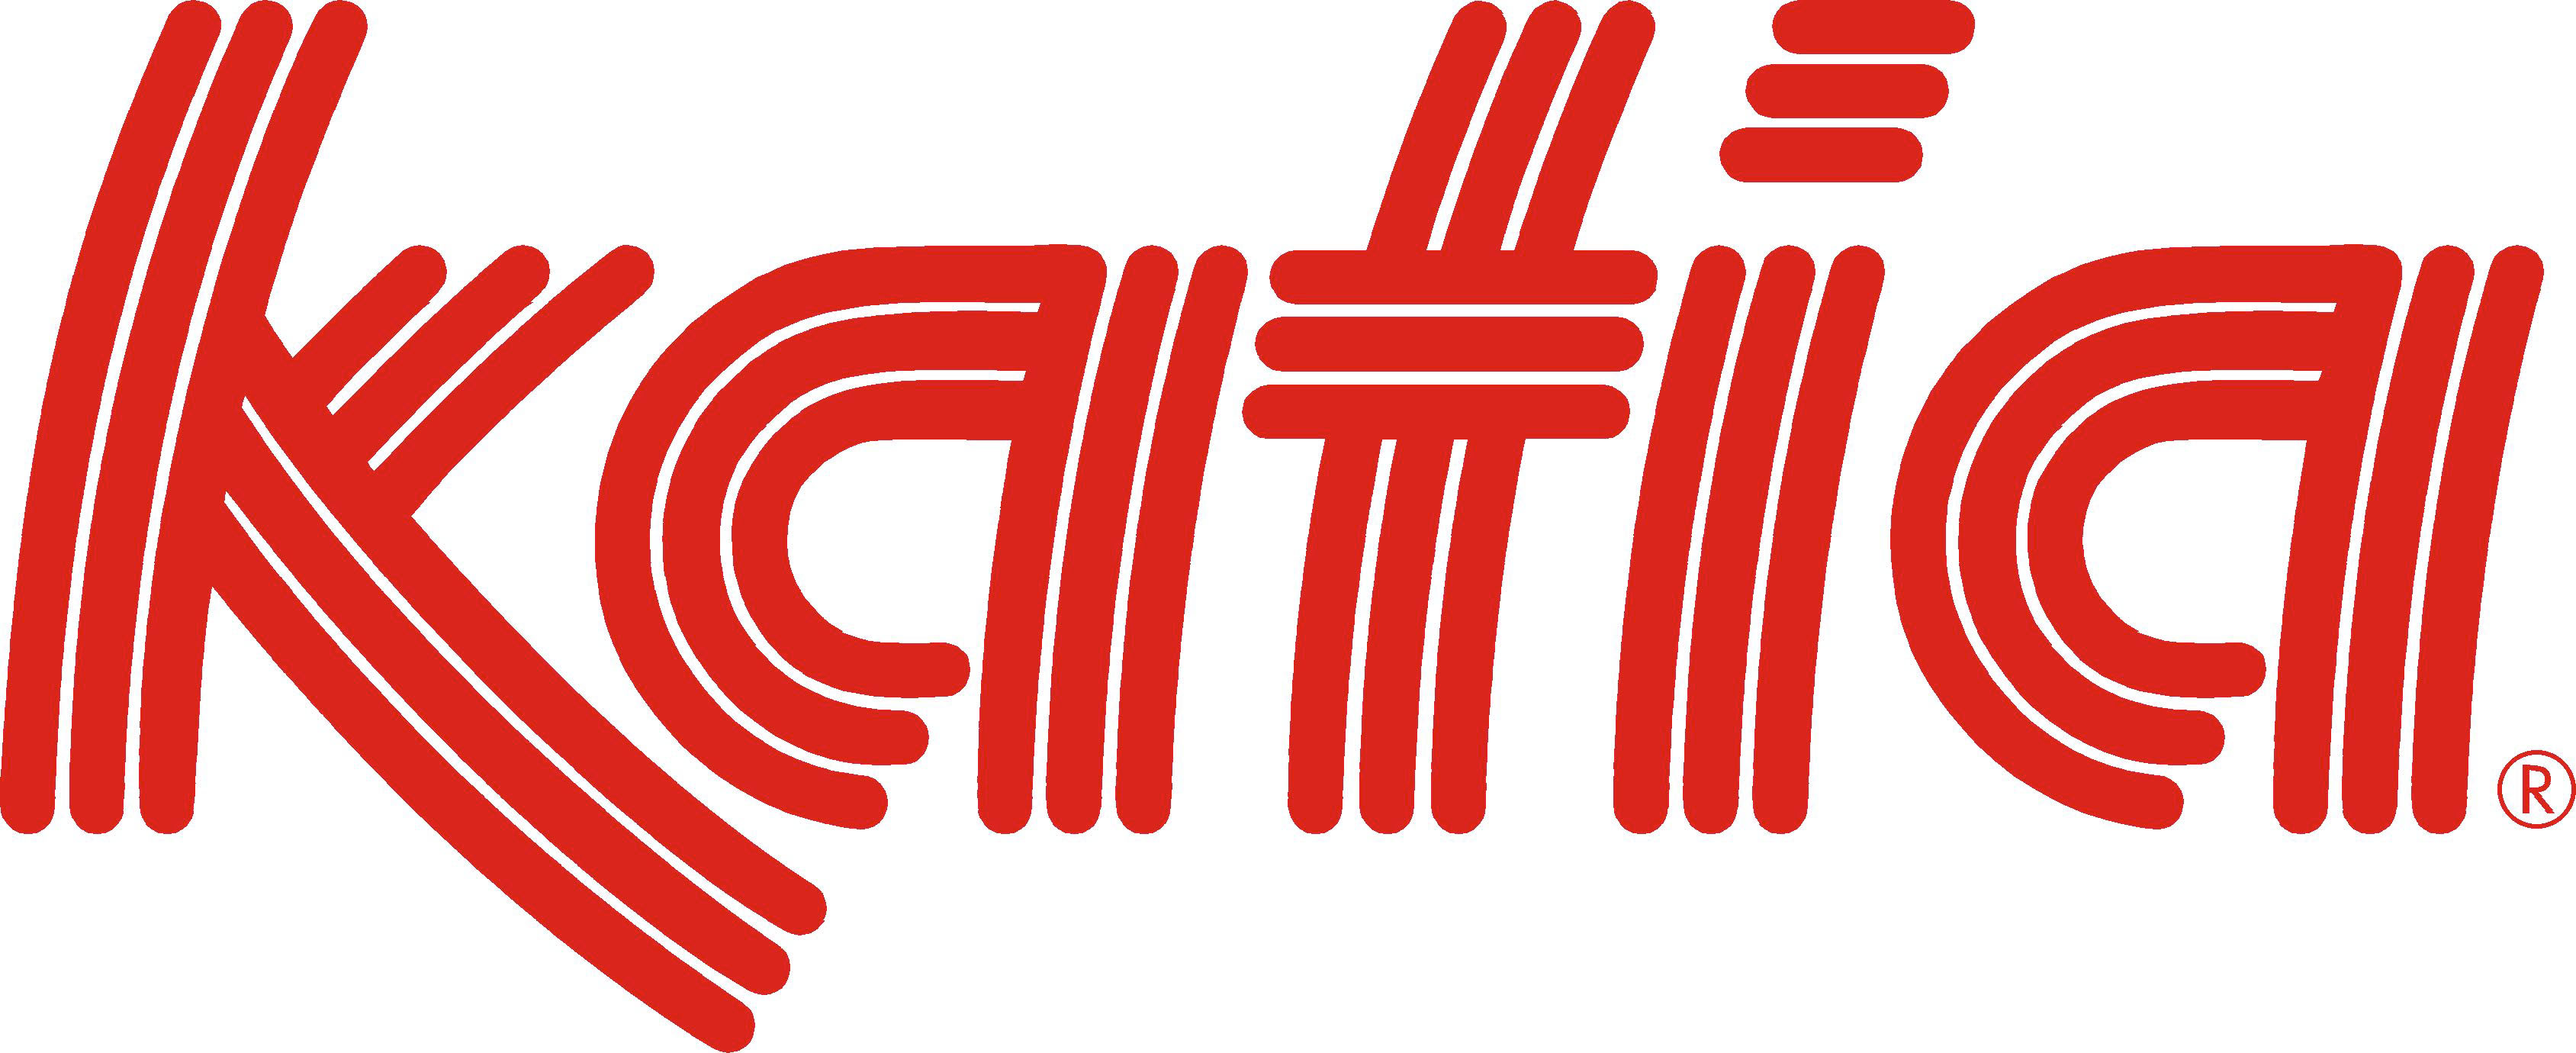 logo katia